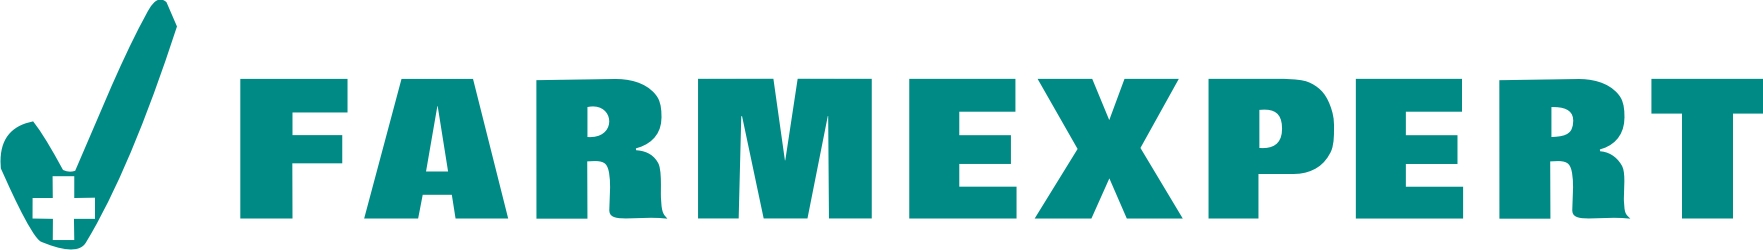 logo farmexpert